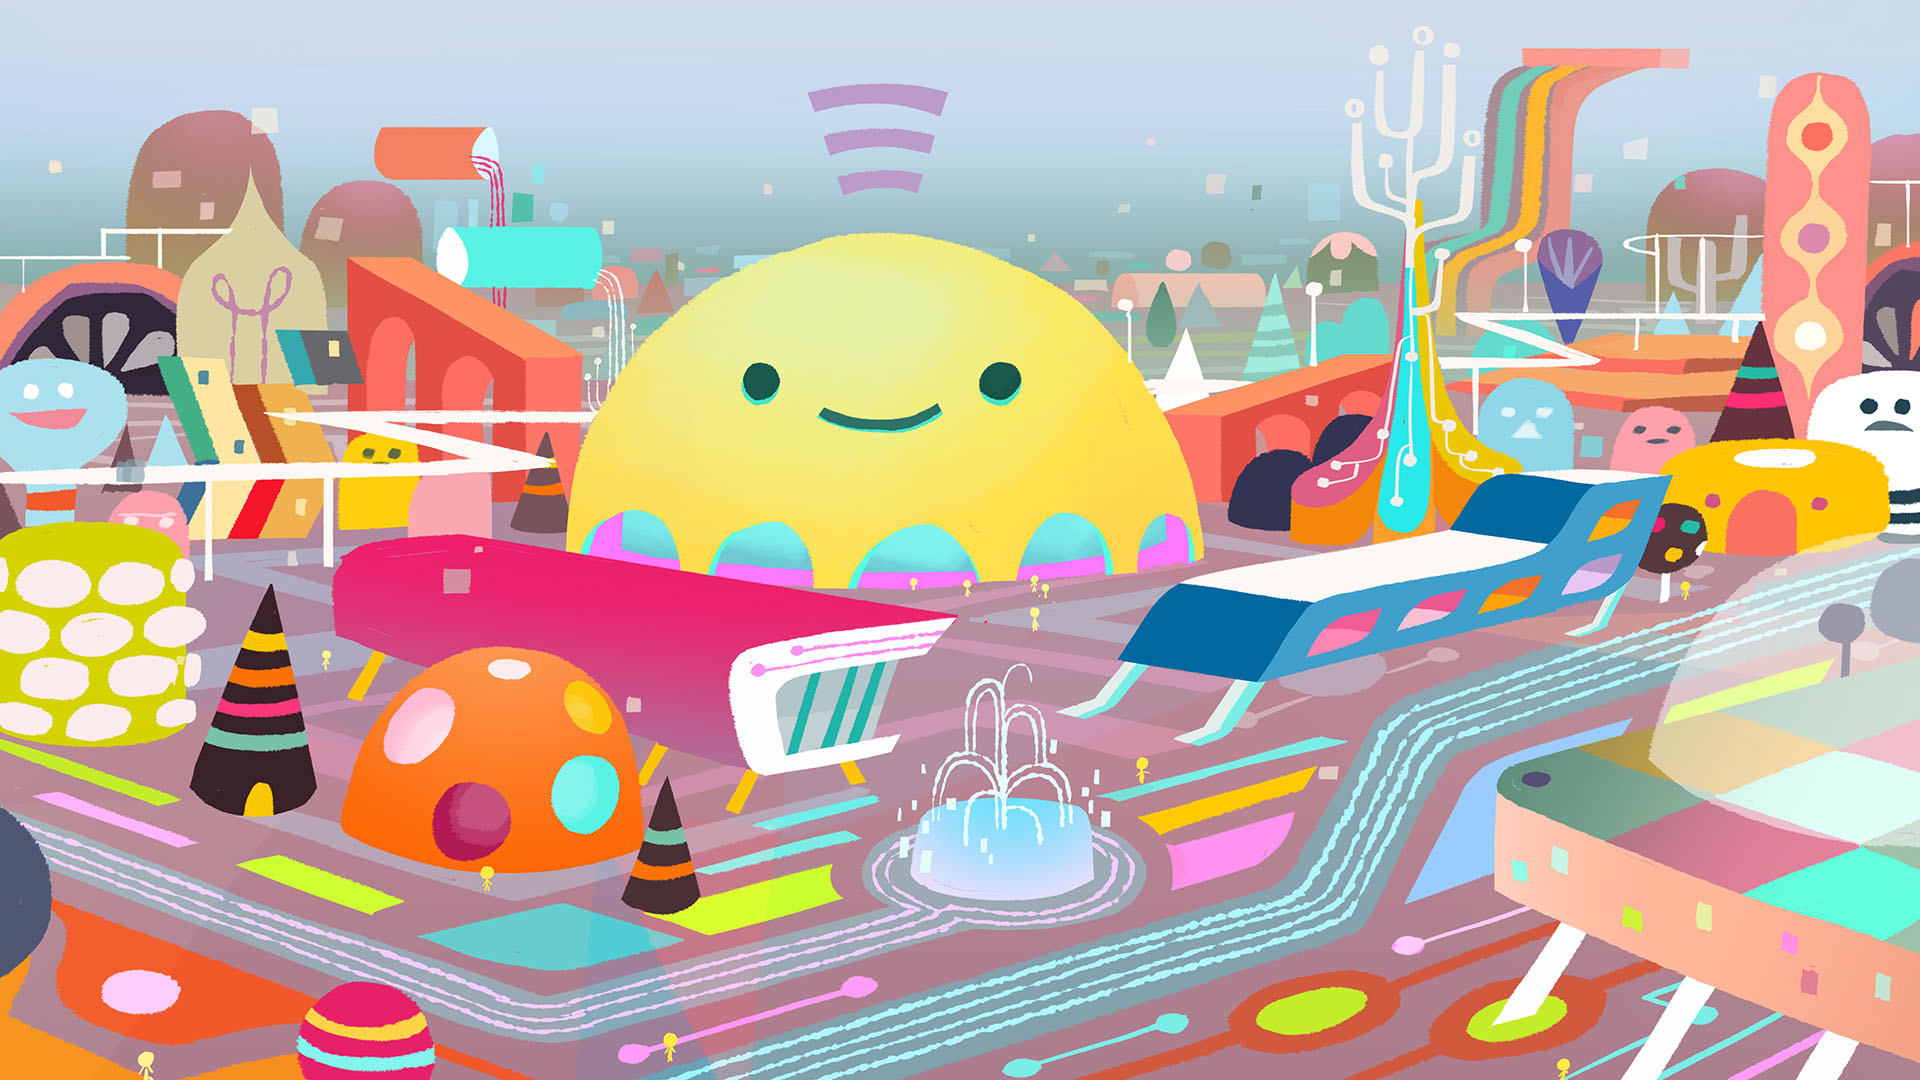 Early emoji city exploration